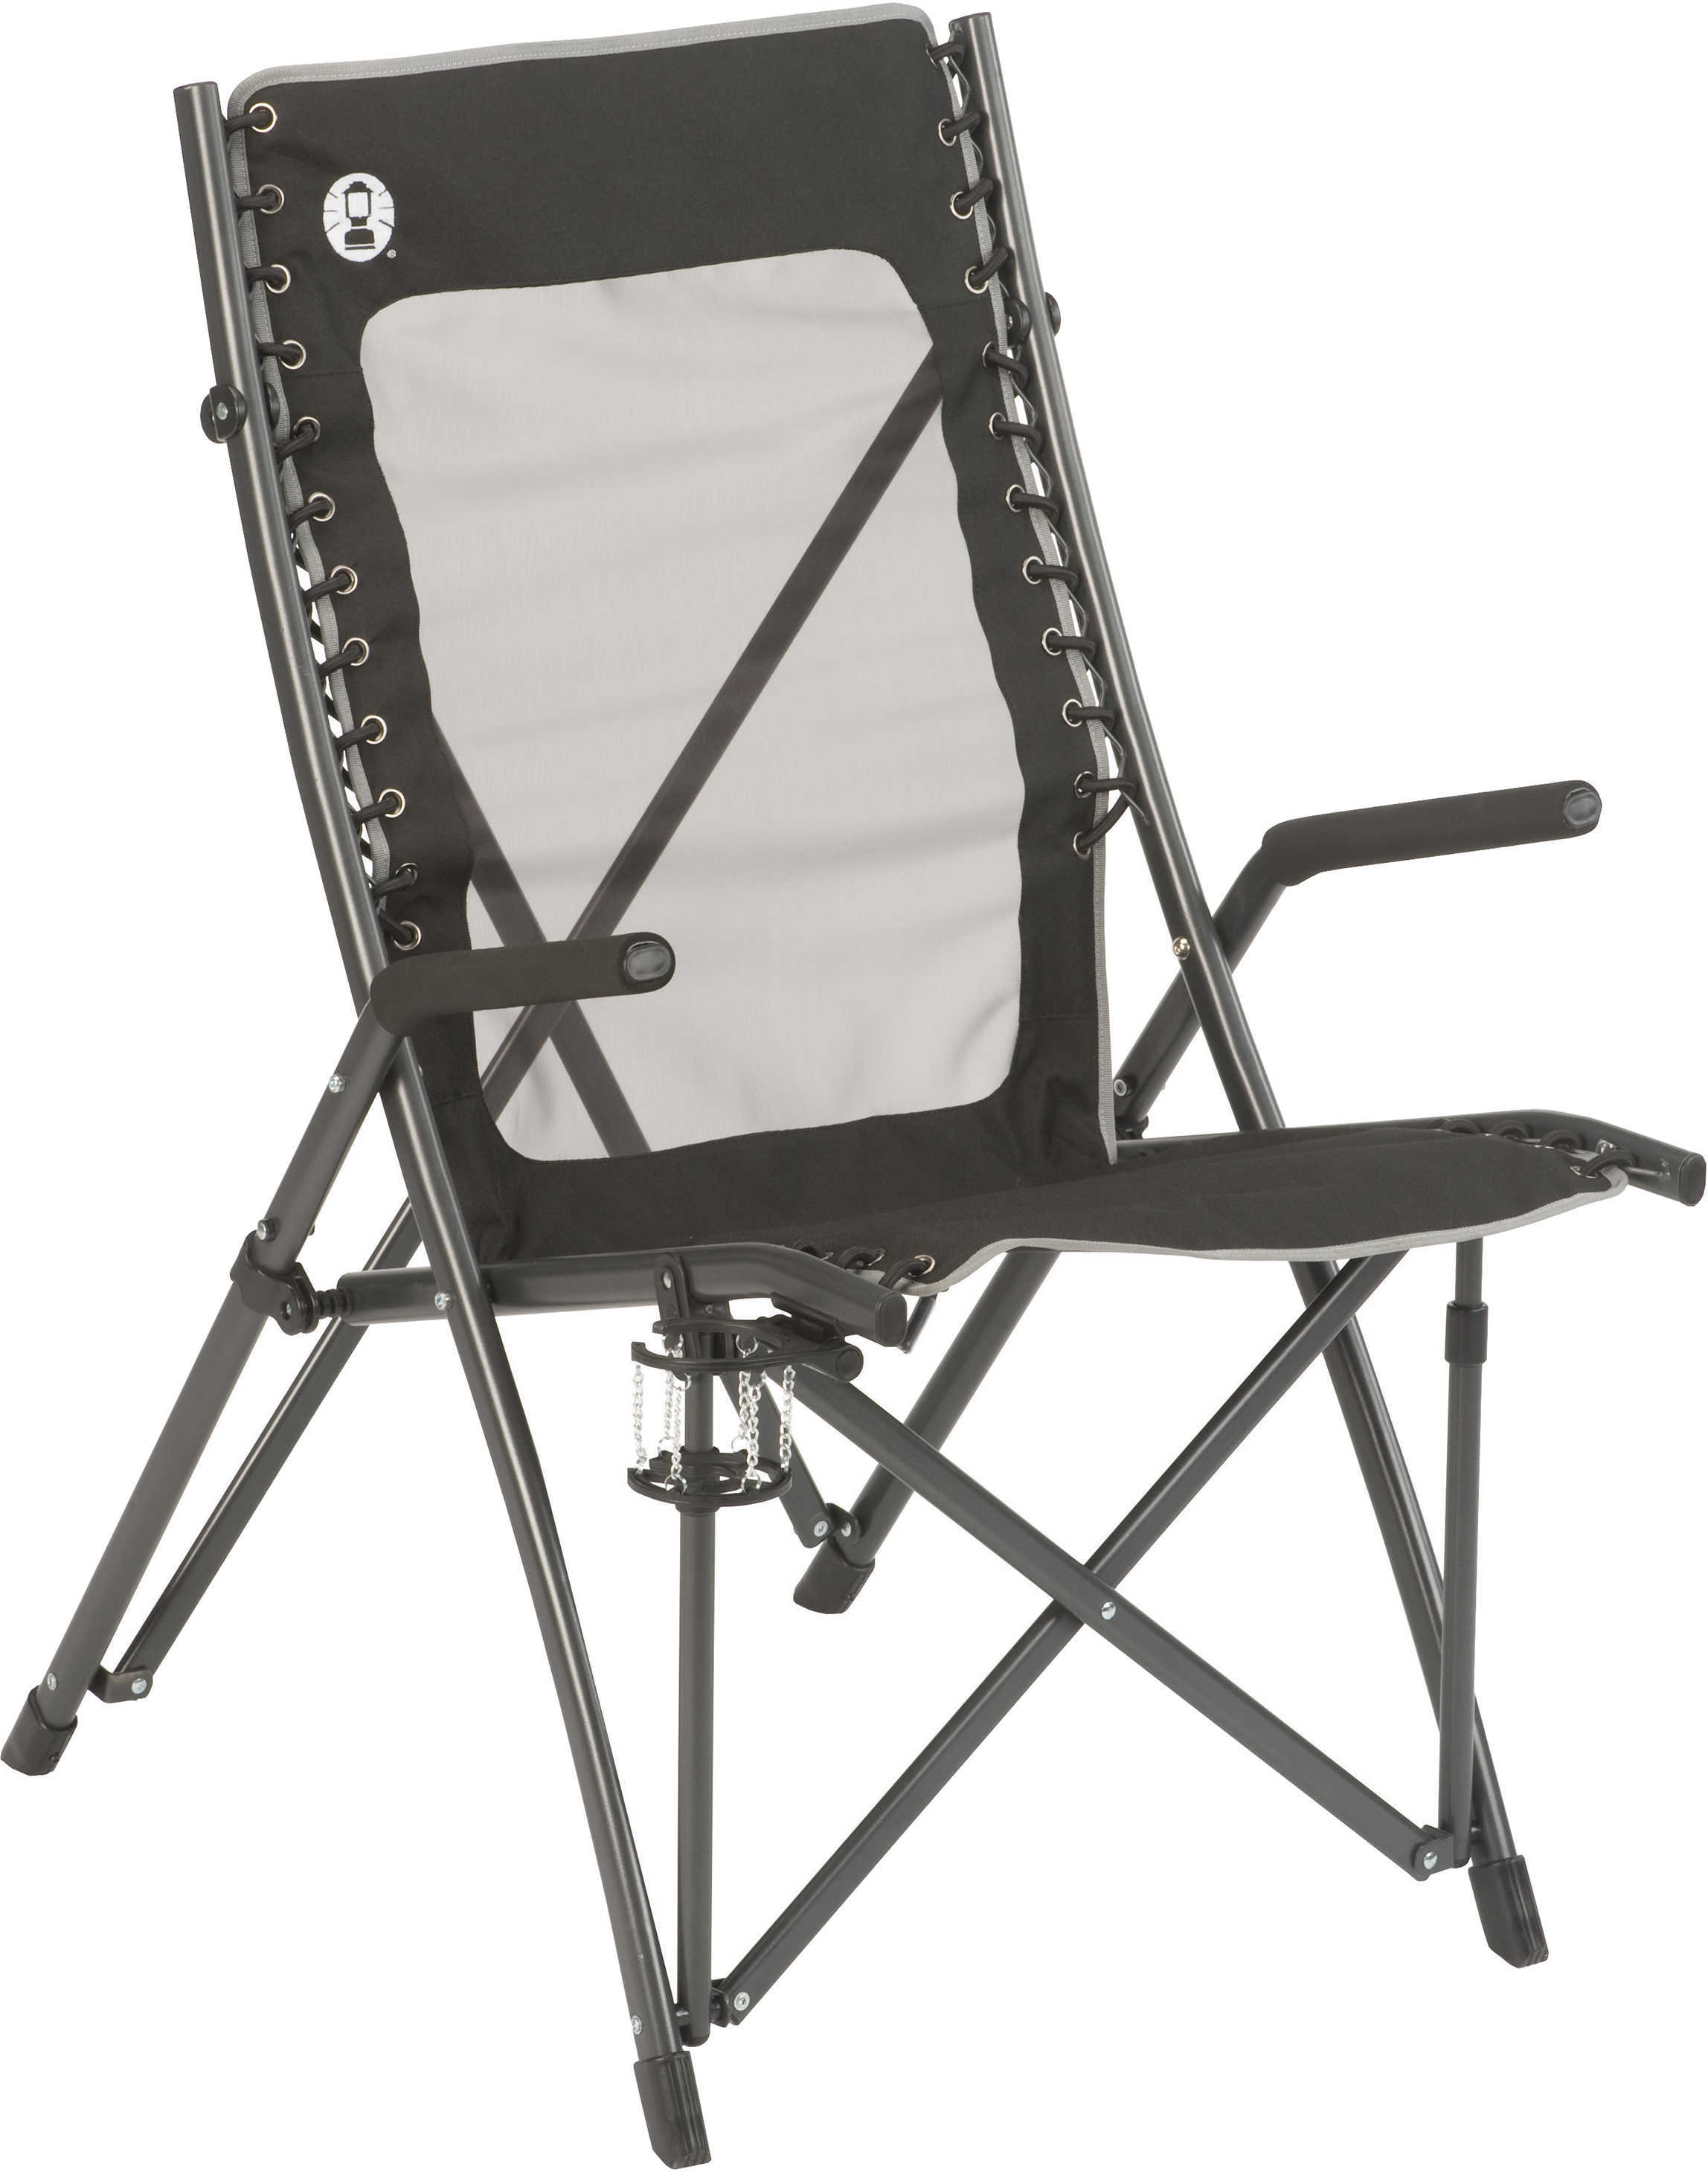 Coleman Chair Comfortsmart Suspension 2000020292